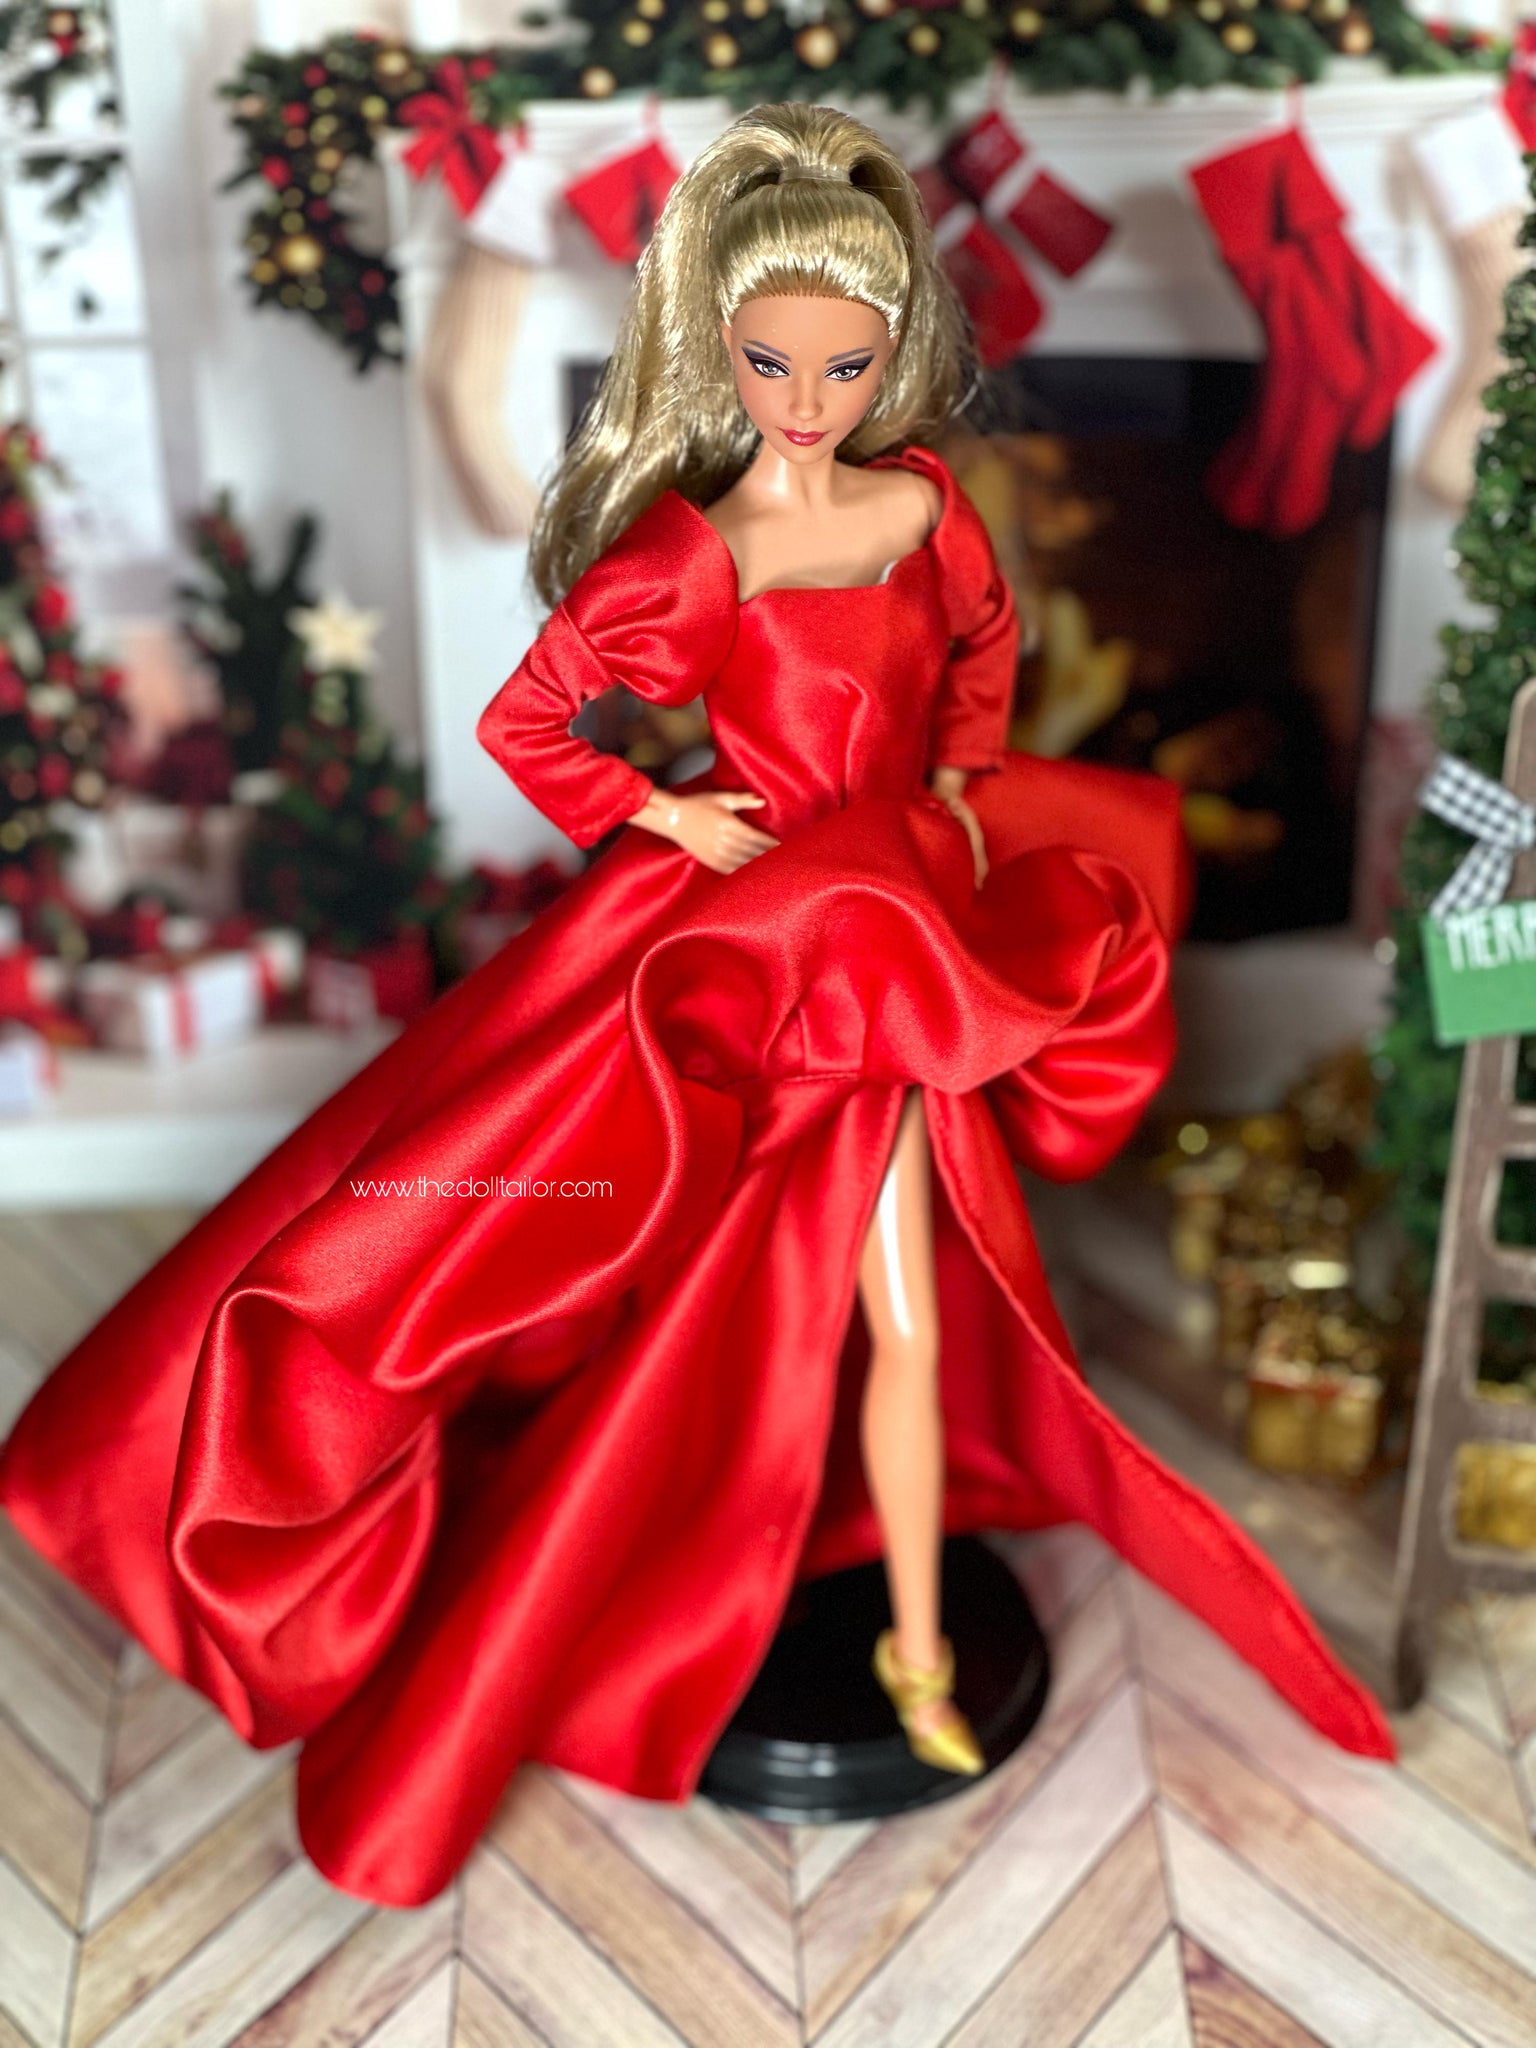 Handmade Oscar Red Dress Outfit Gown For Silkstone Barbie Fashion Royalty  FR | eBay